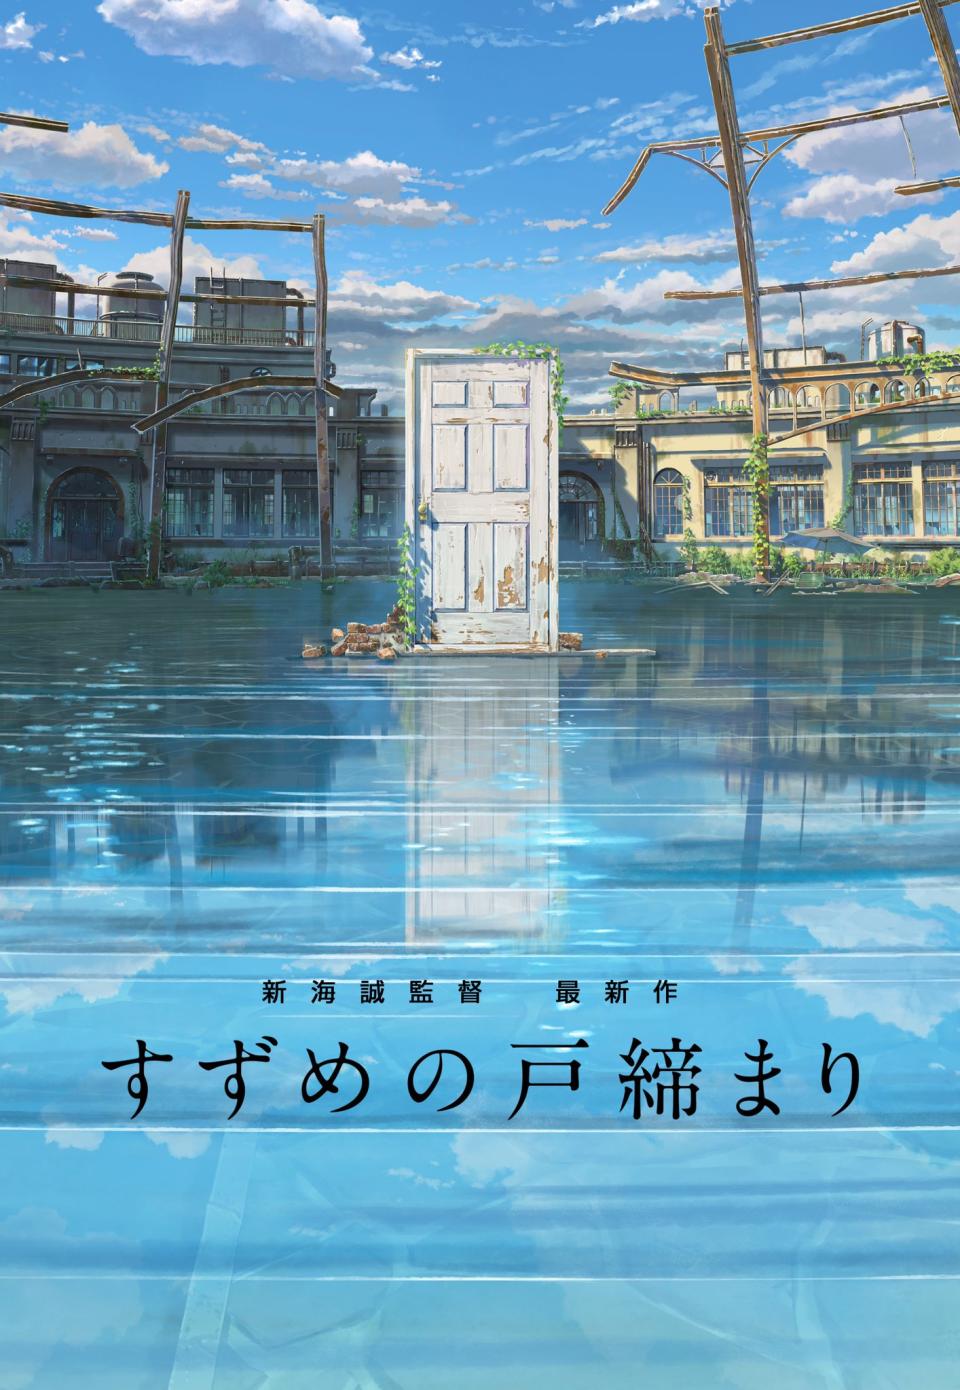 Teaser art of Suzume No Tojimari, a new film by Makoto Shinkai. (Image: Twitter/shinkaimakoto)